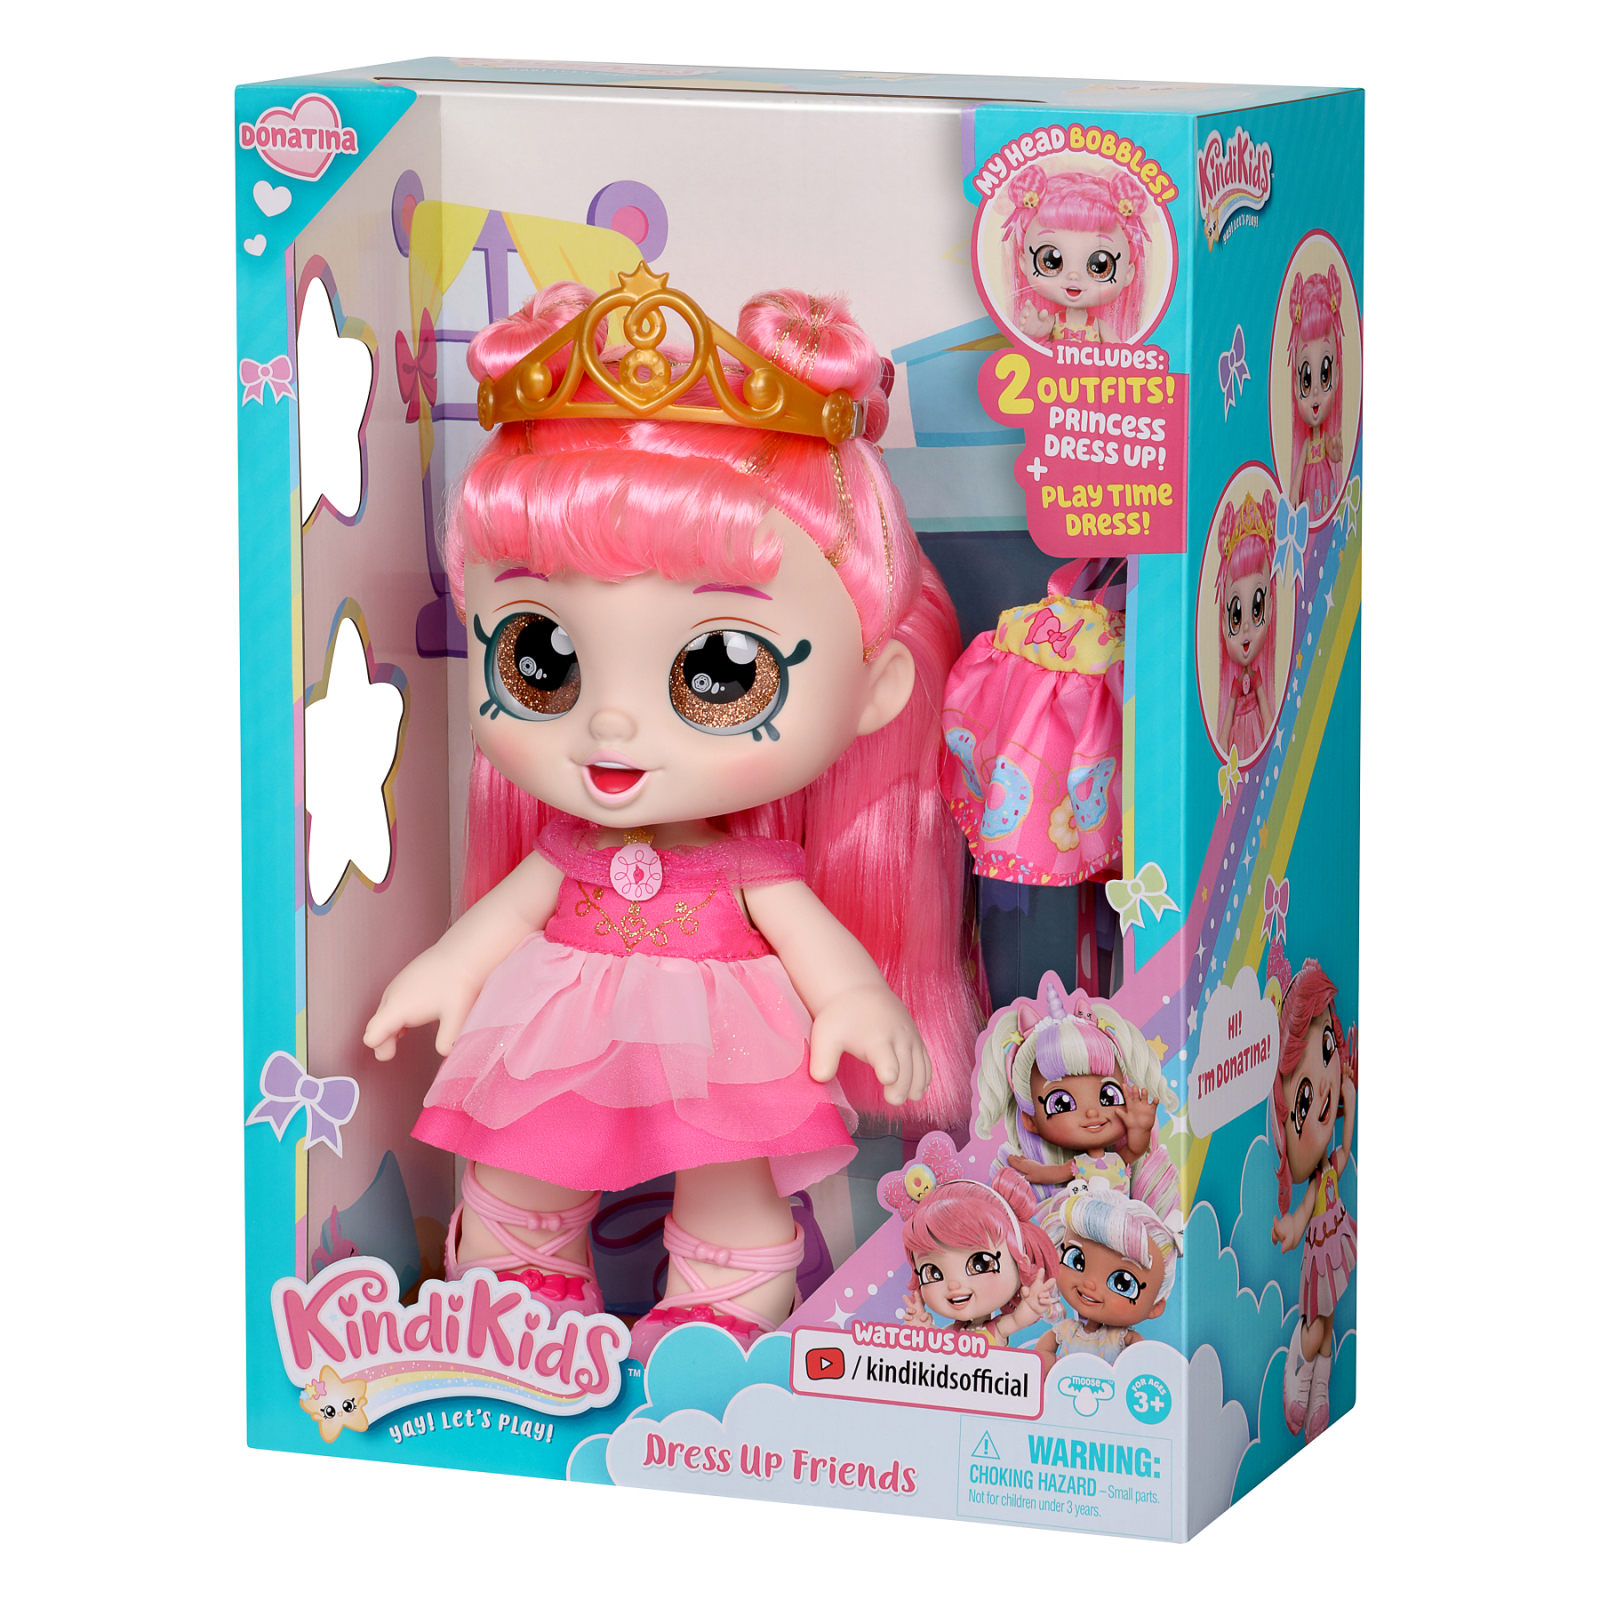 Кукла Kindi Kids Донатина - Принцесса Dress Up Friends (50065) изображение 2